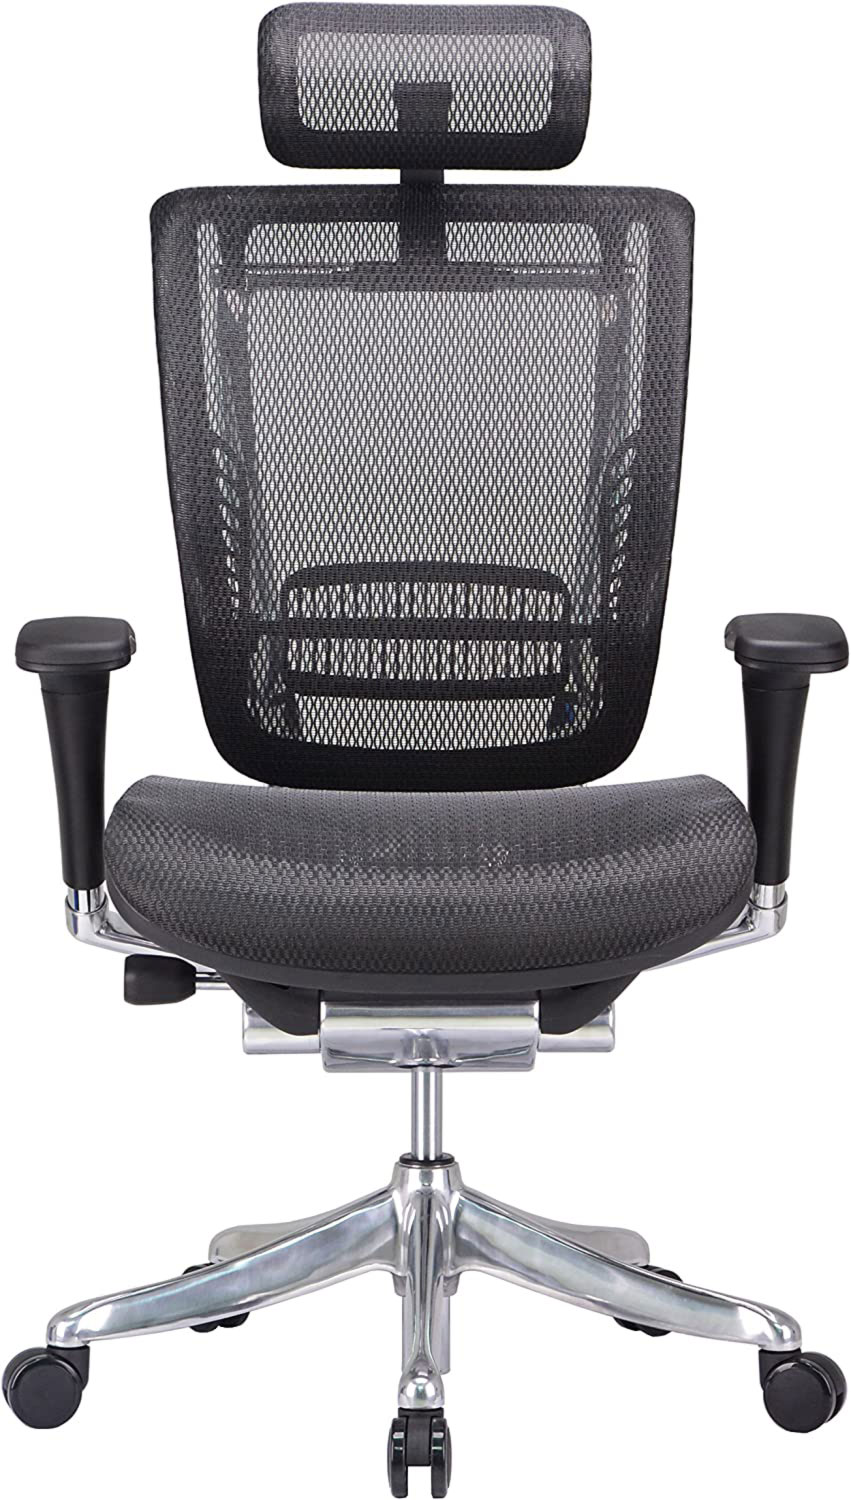 Enklave XL Ergonomic Mesh Executive Chair with Headrest